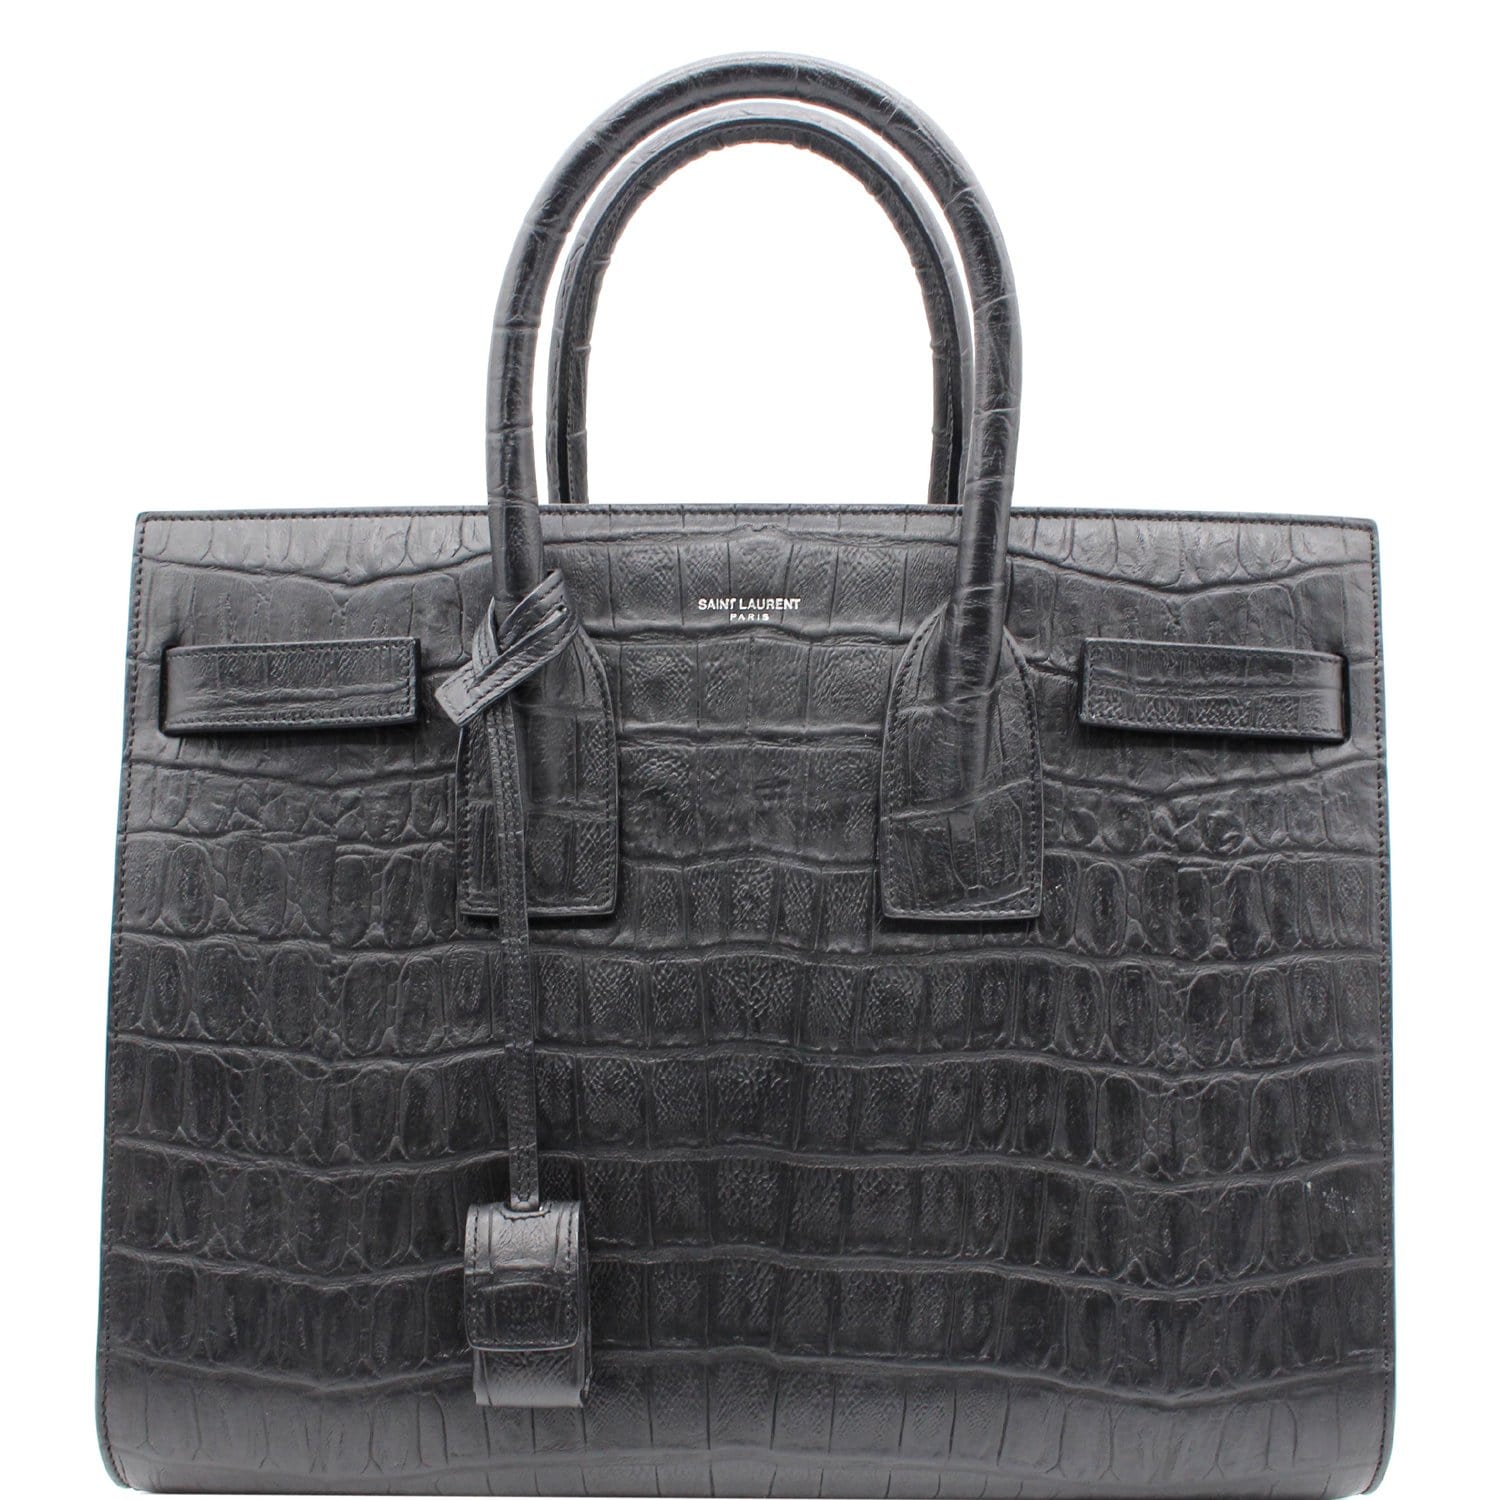 Saint Laurent Sac De Jour bag in crocodile printed gray leather